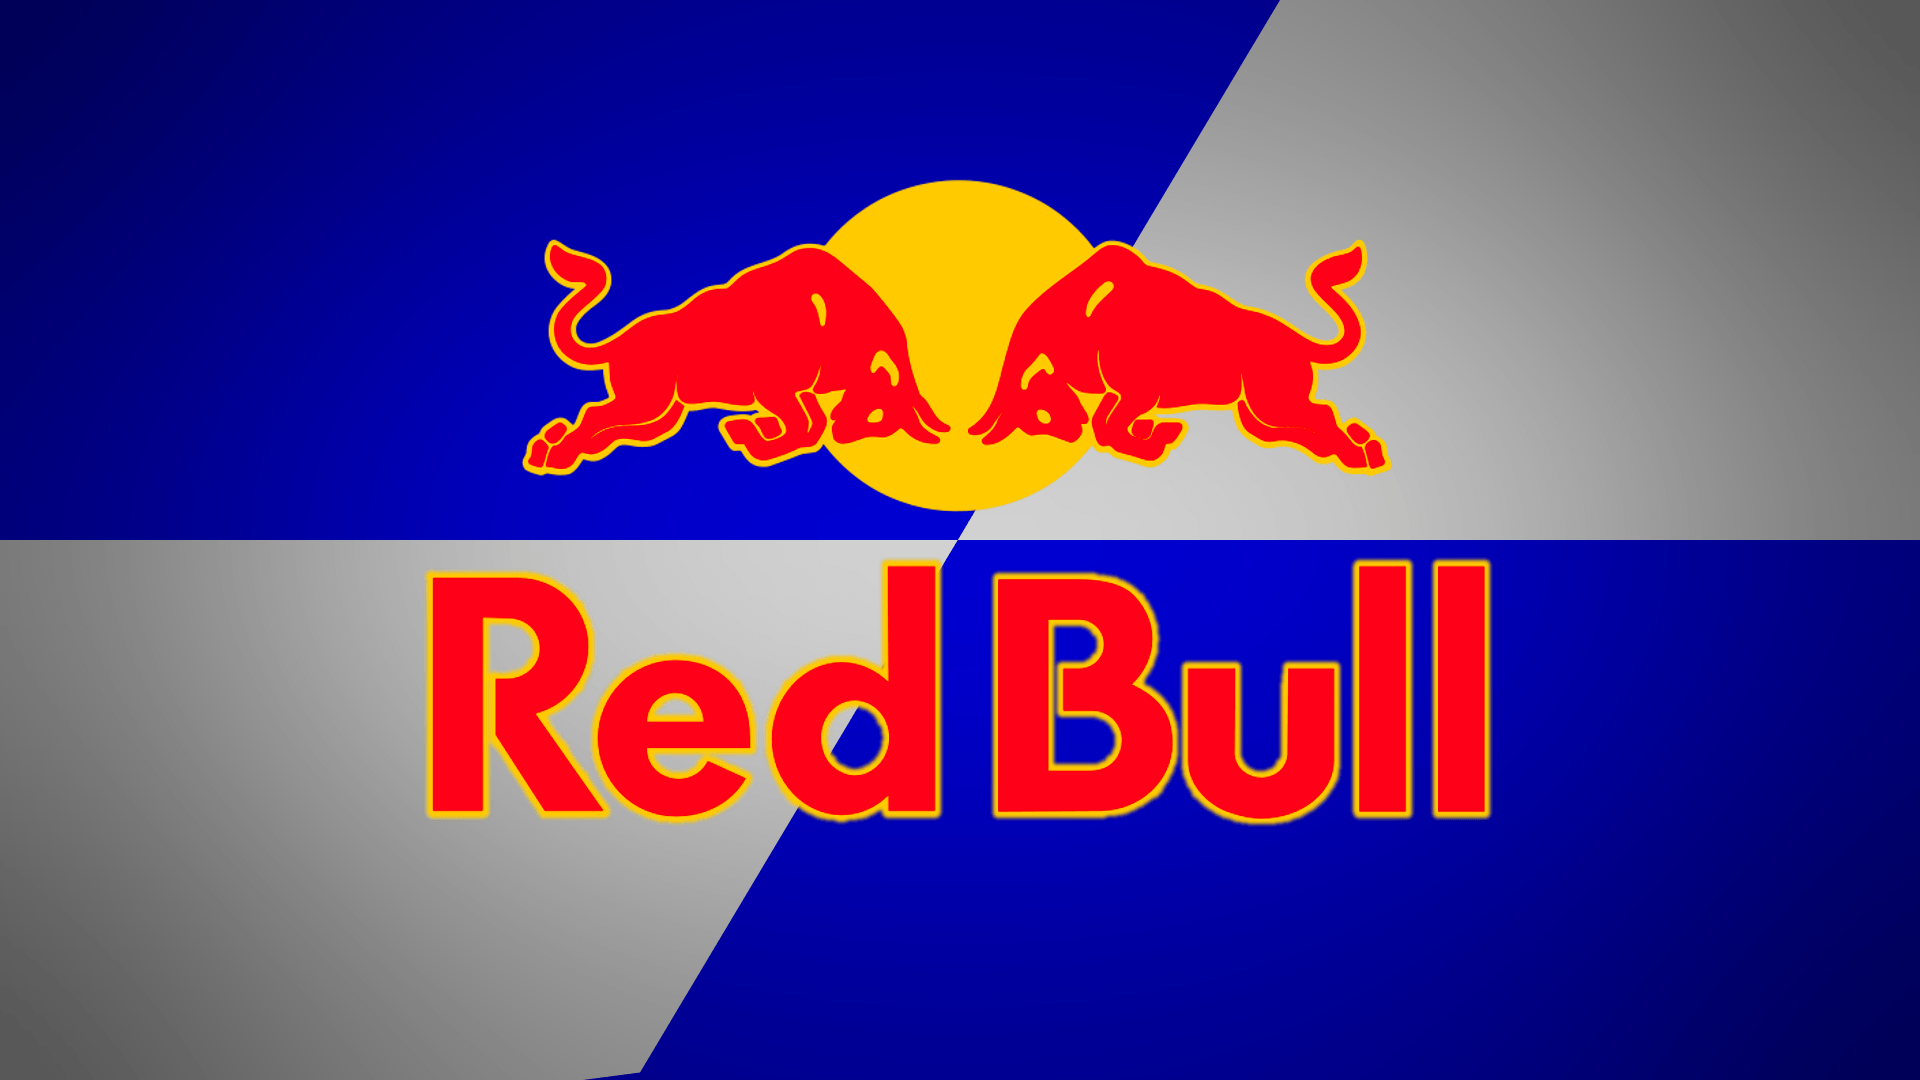 Cool Red Bull Logo - Free Download Red Bull Logo Wallpapers | wallpaper.wiki